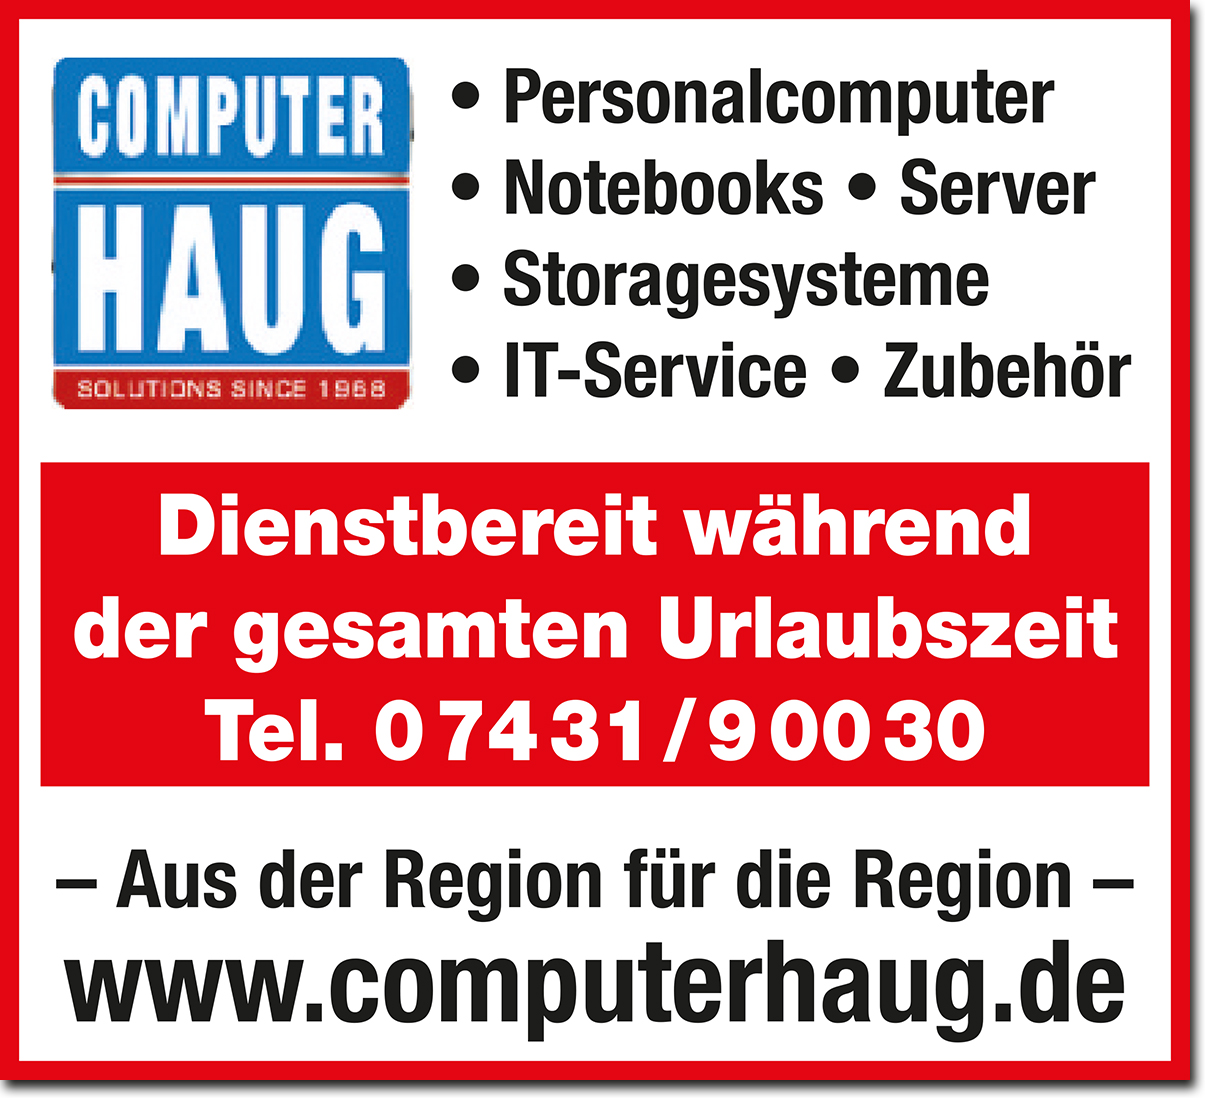 COMPUTER HAUG GmbH